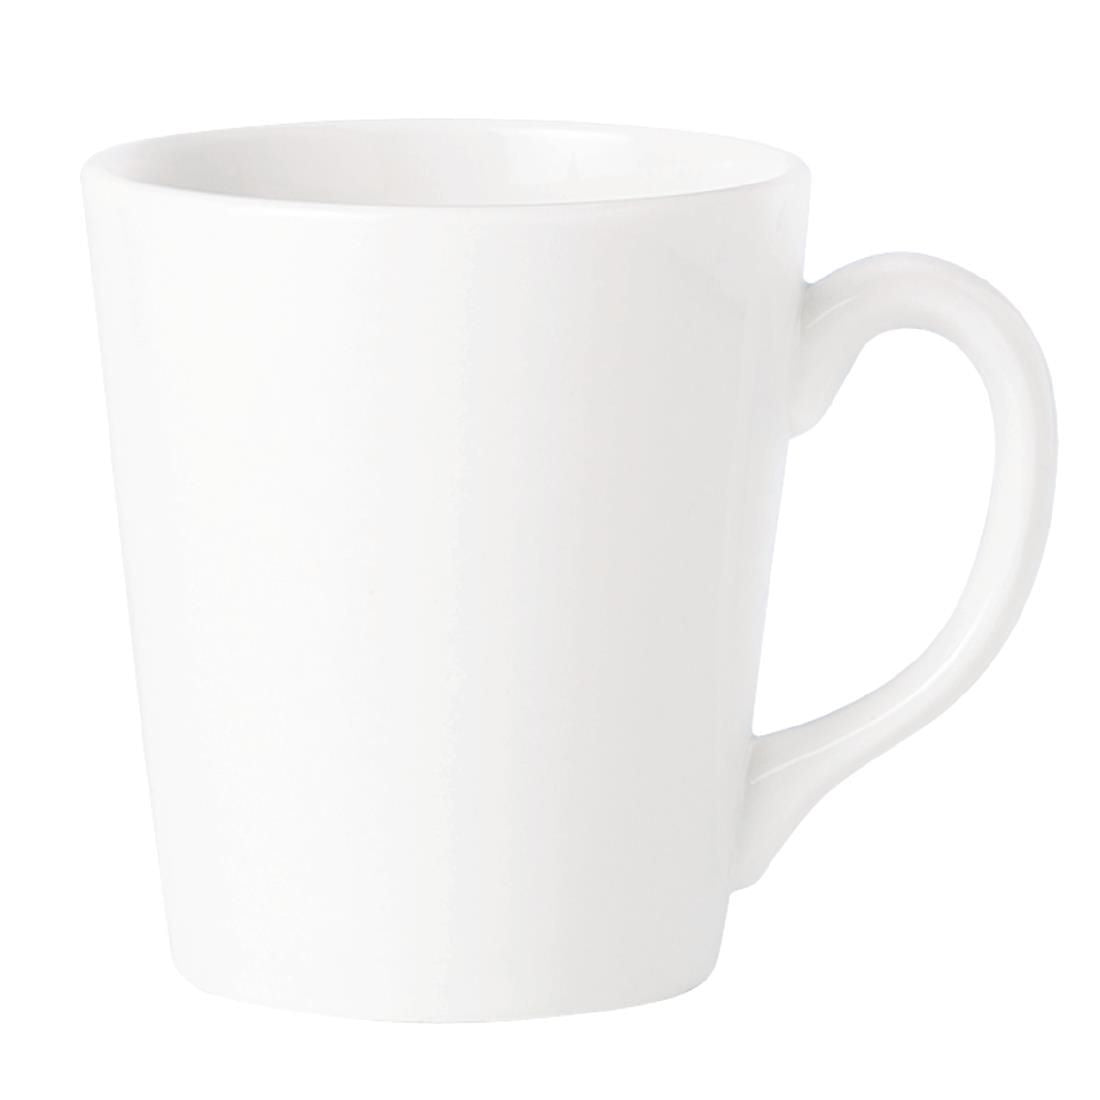 Steelite Simplicity White Coffeehouse Mugs 340ml (Pack of 36)